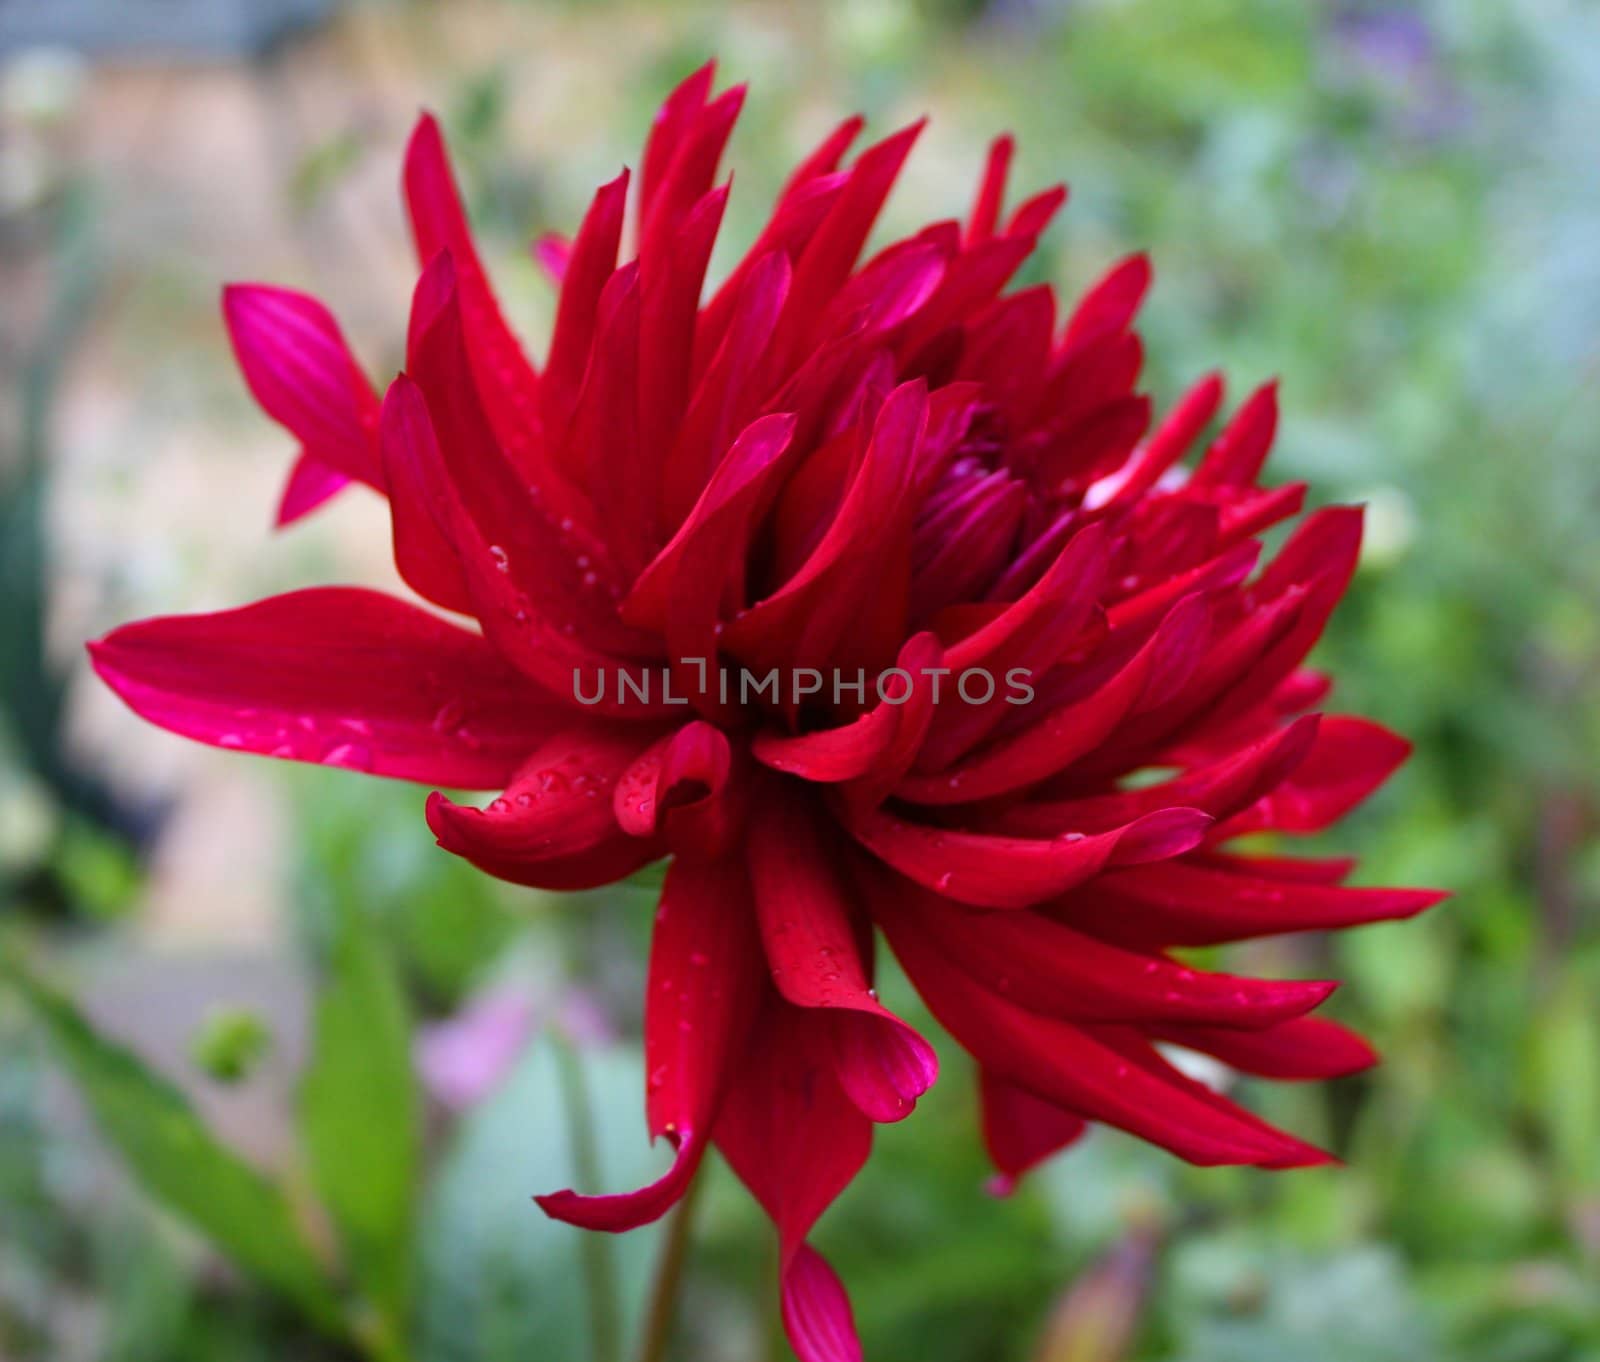 A pretty, red flower